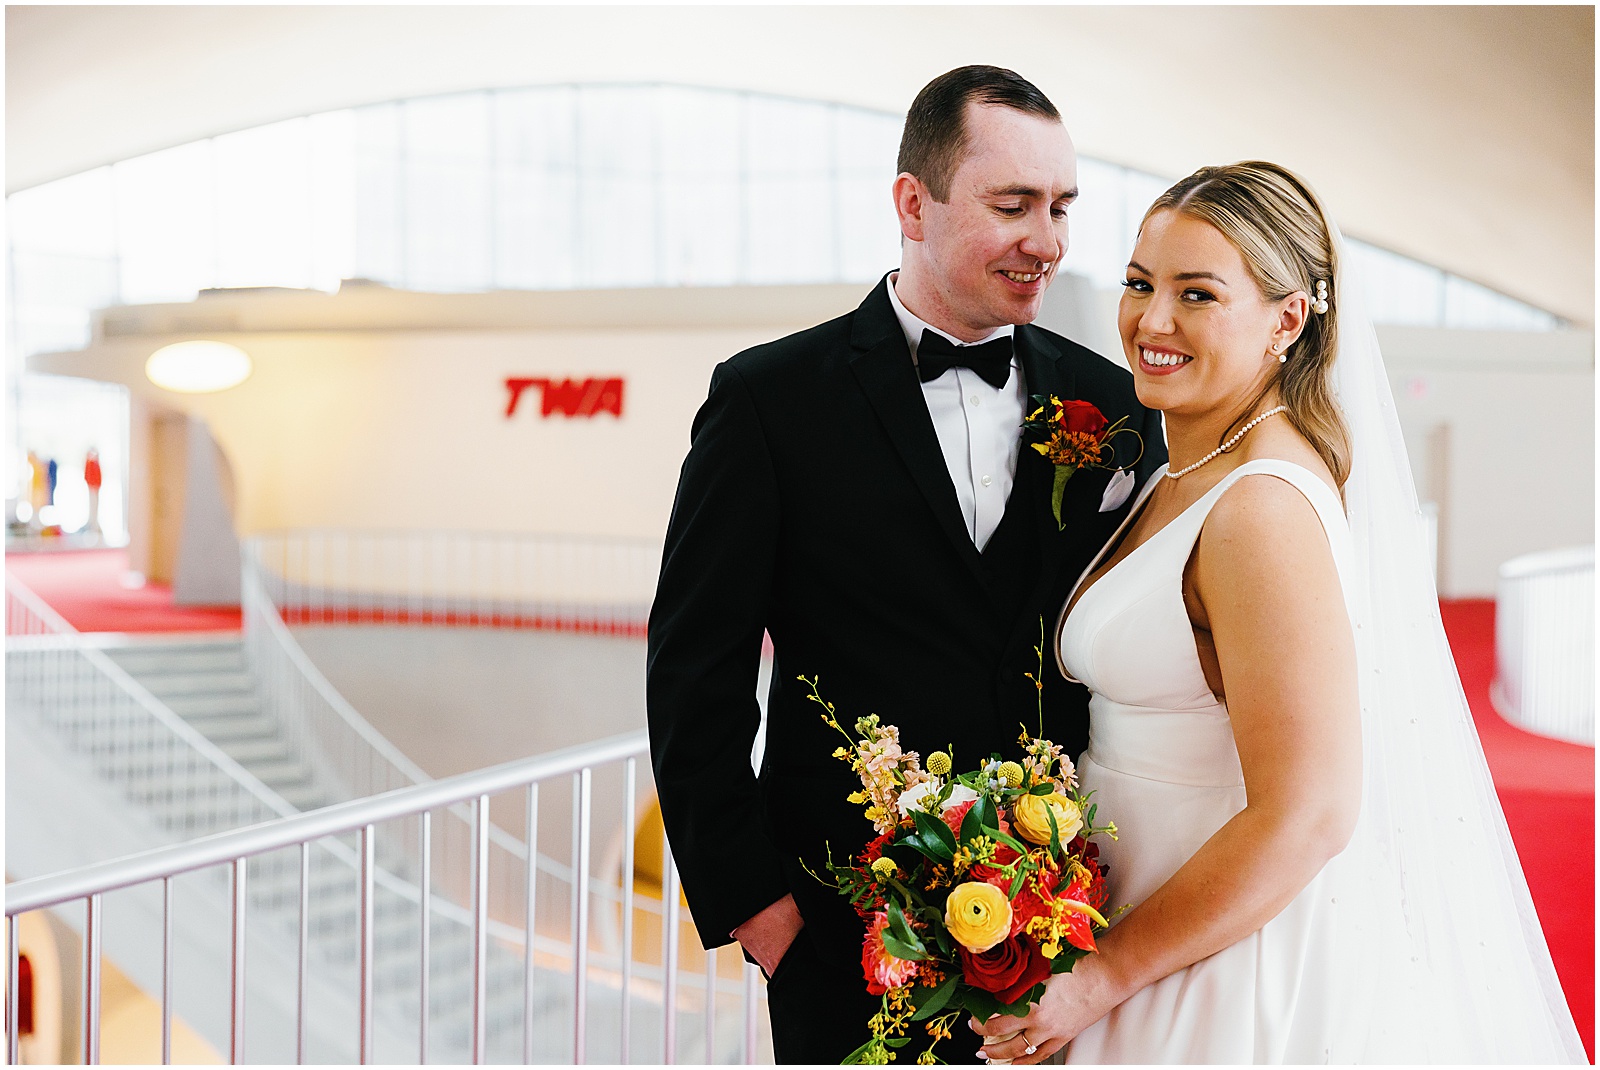 A couple having their TWA Hotel wedding captured in a lobby photo.